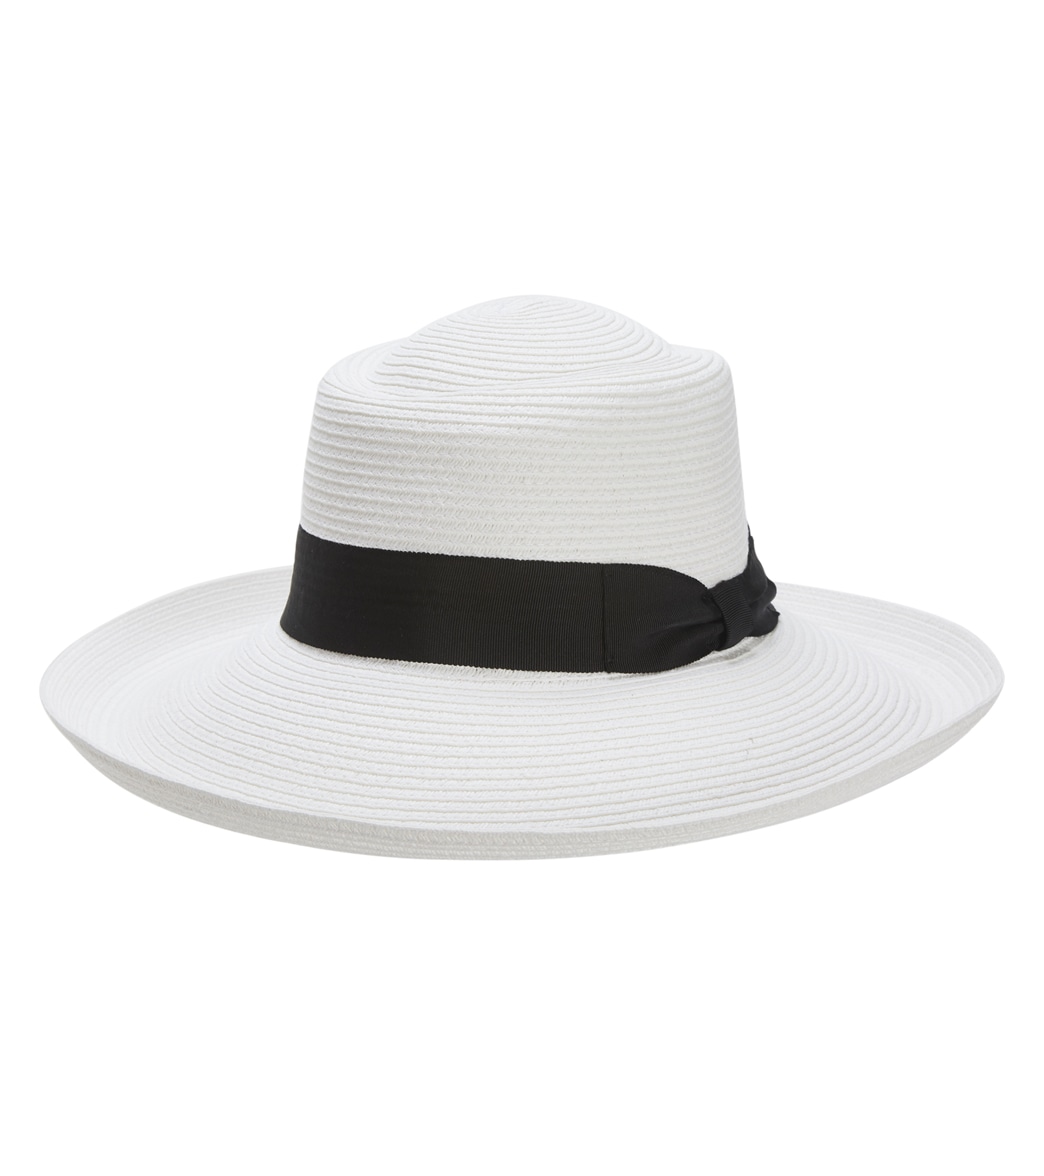 Physician Endorsed Women's Santa Cruz Straw Hat - White/Black One Size - Swimoutlet.com